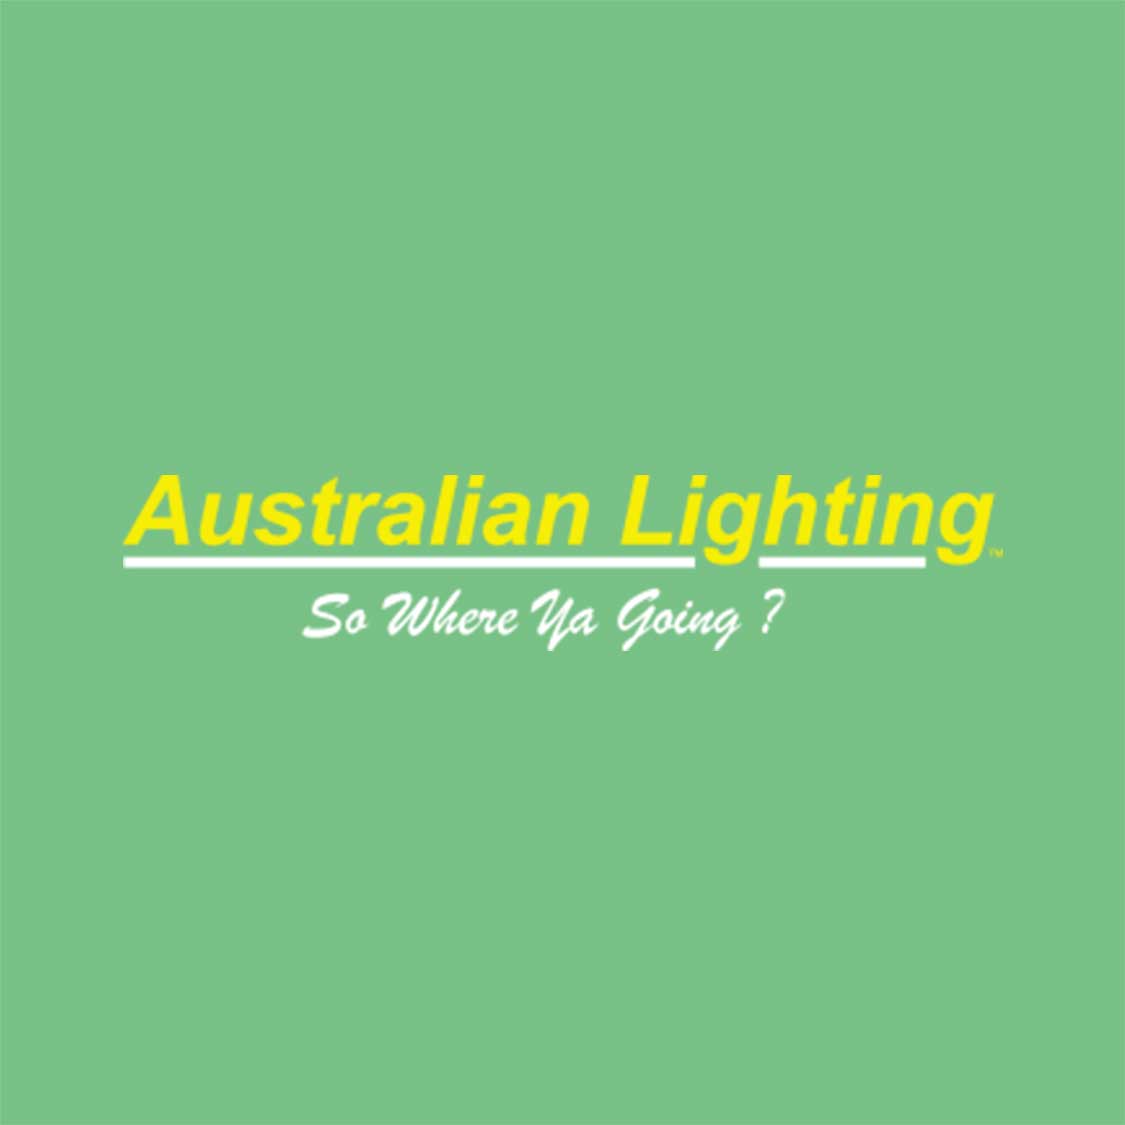 Floyd Dimmable Table Lamp Australian, Table Lamp With Usb Port Australia